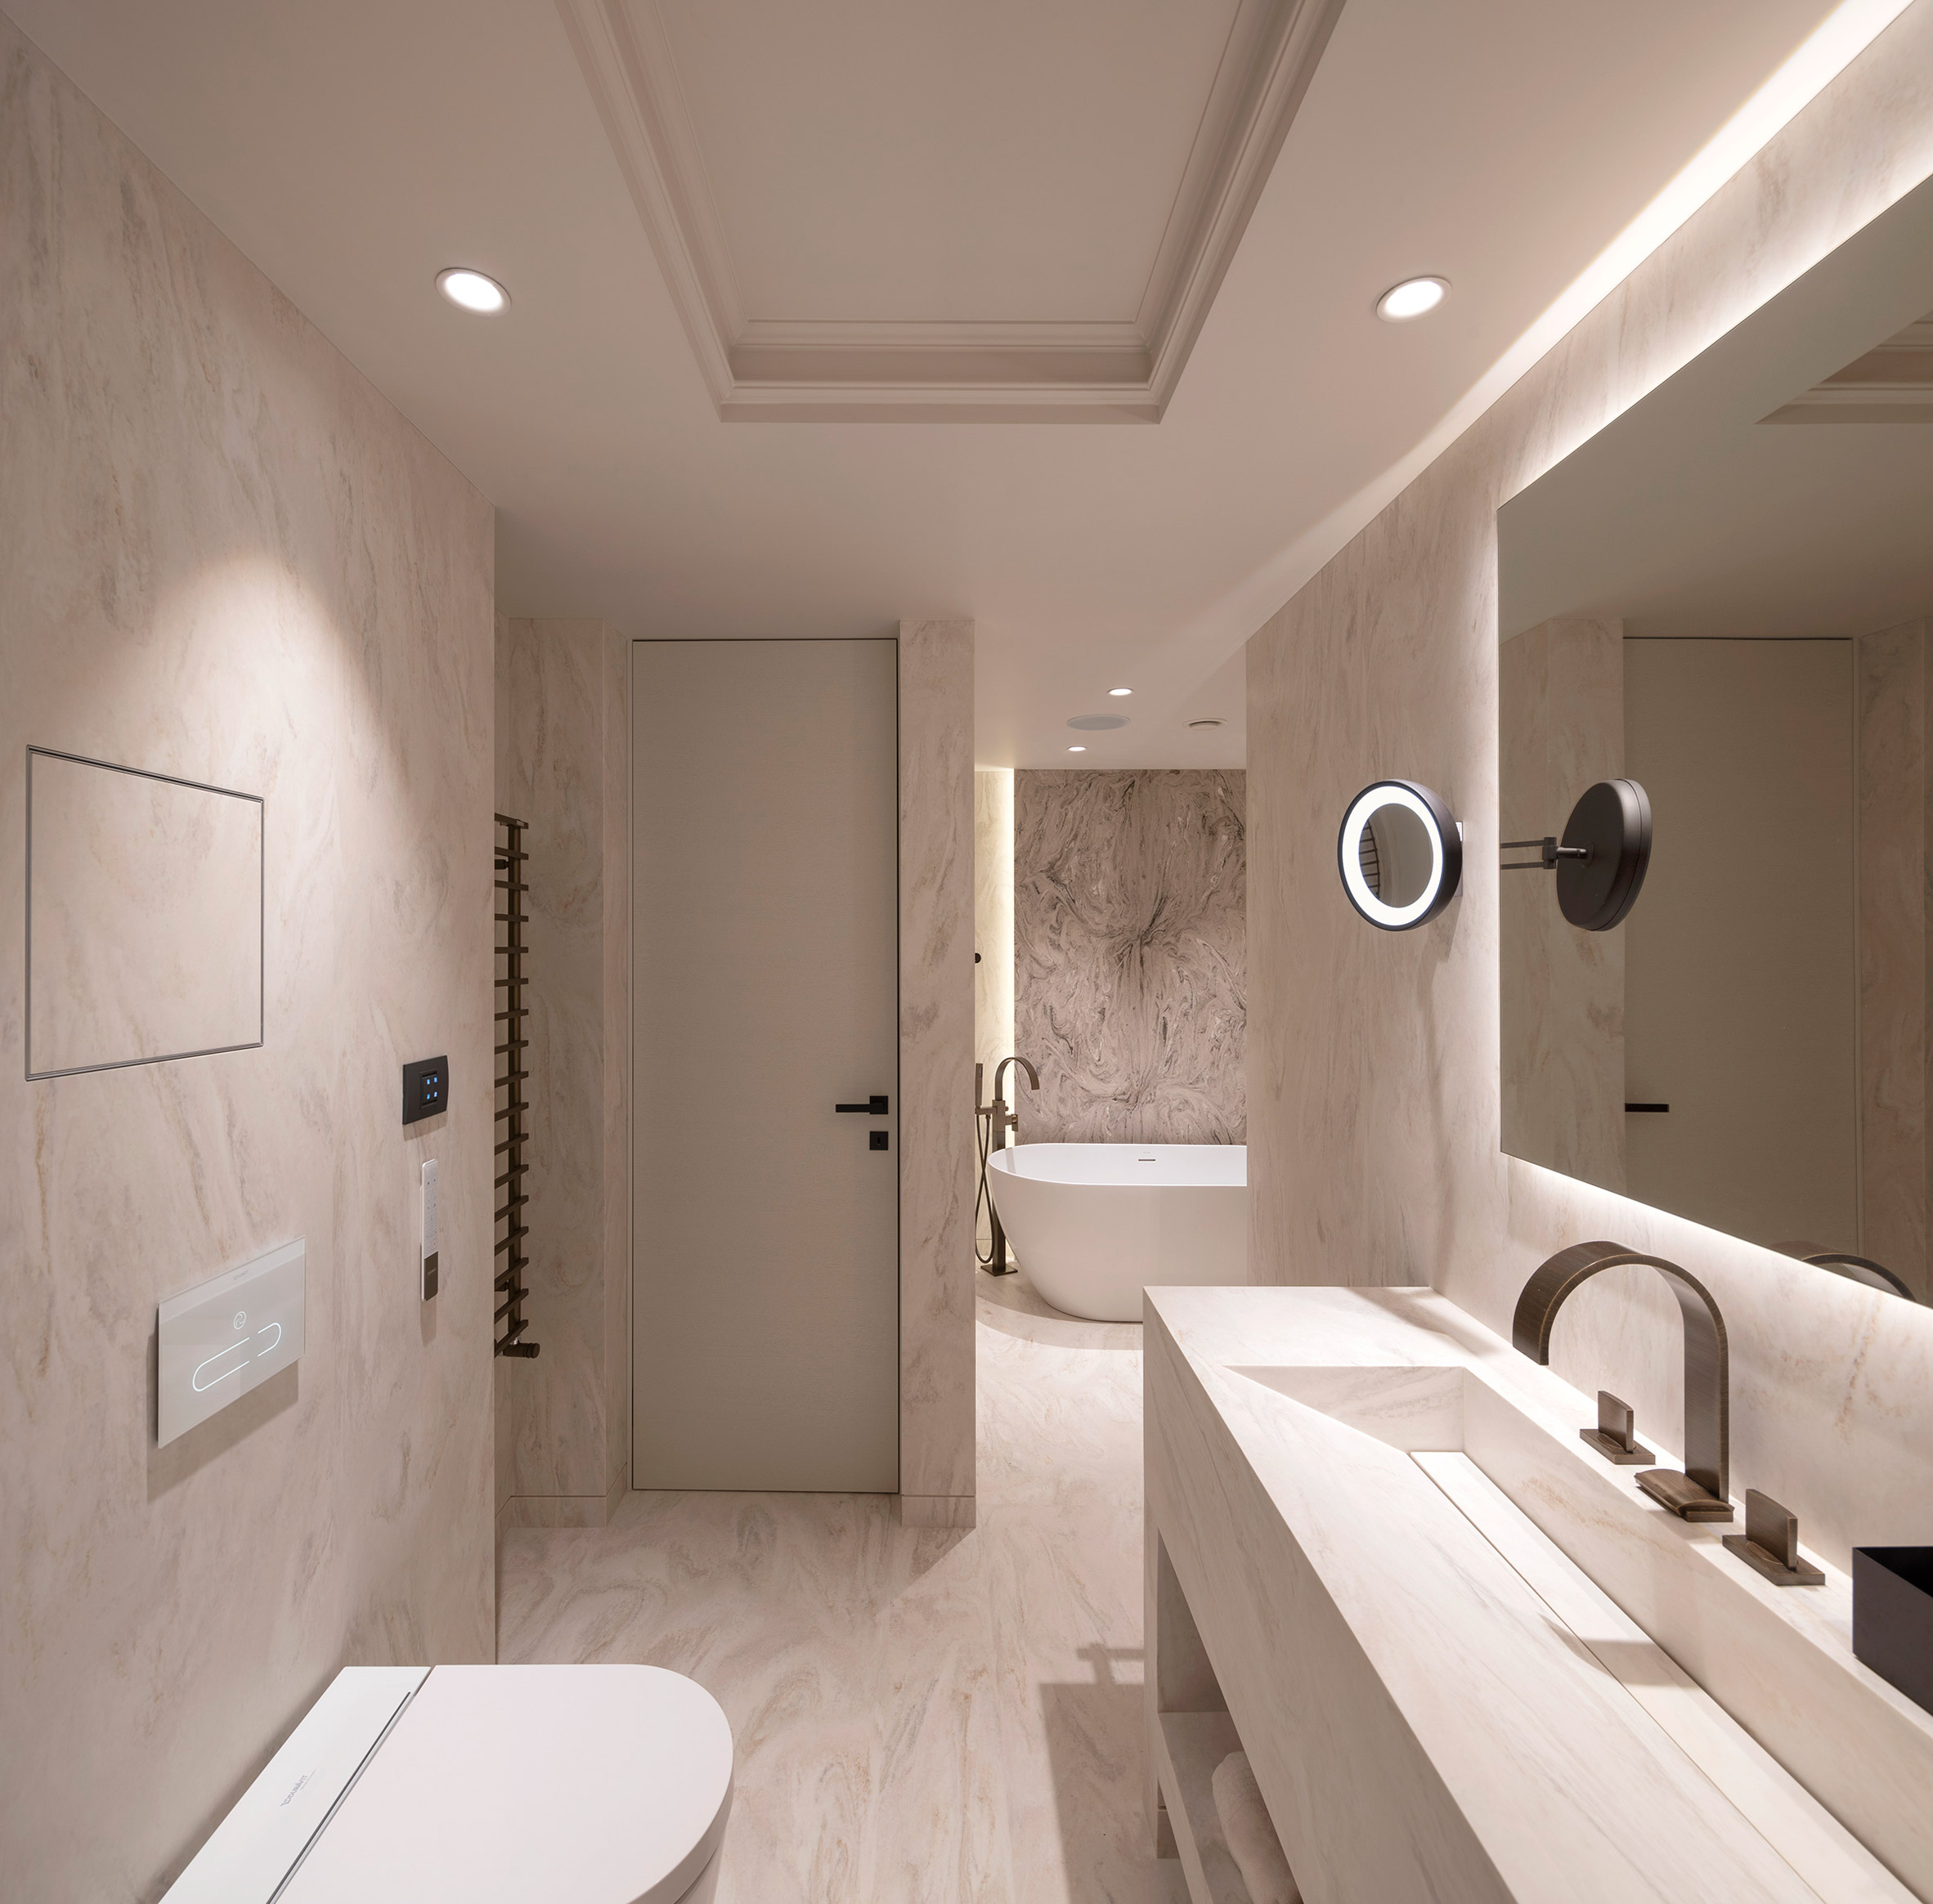 Corian Solid Surface用于在索菲亚浴室打造“无缝”优雅|ART-Arrakis | 建筑室内设计的创新与灵感